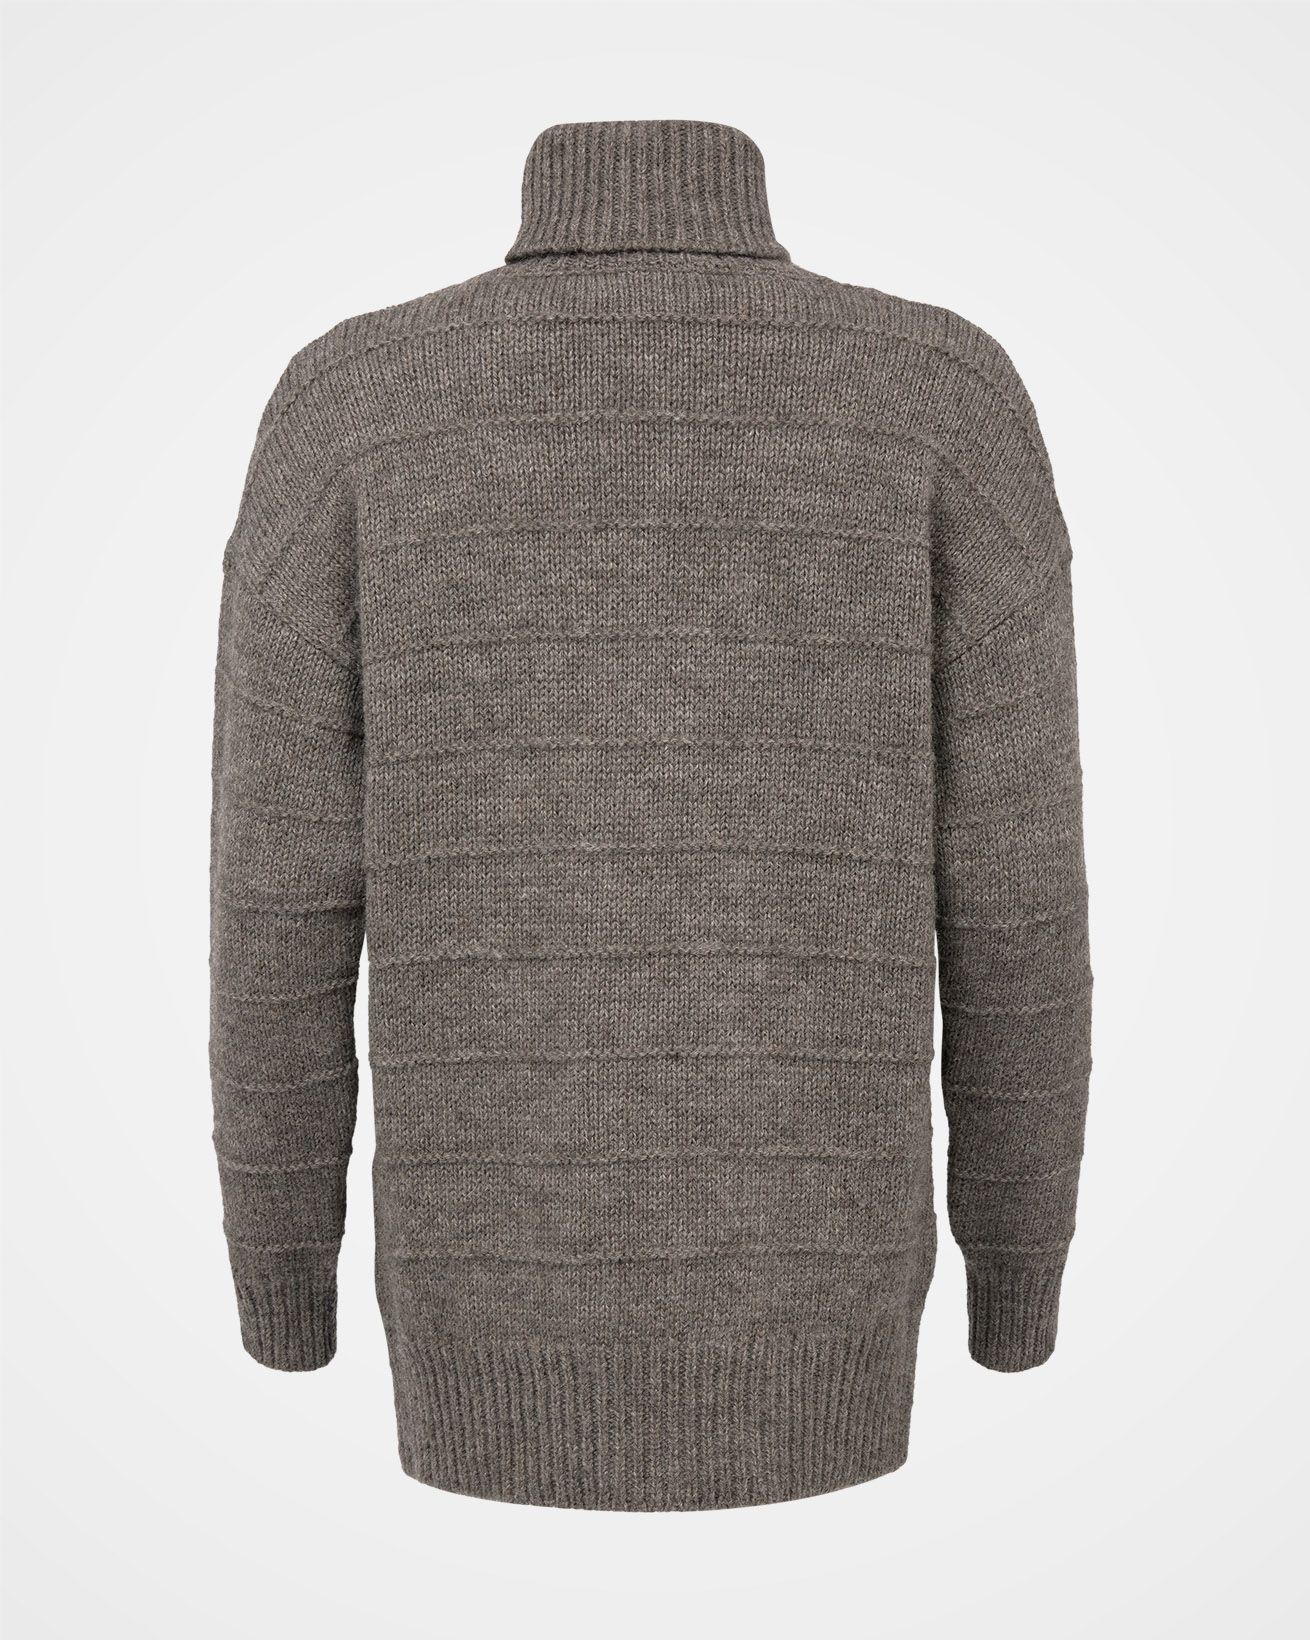 Purl Detail Turtleneck Sweater